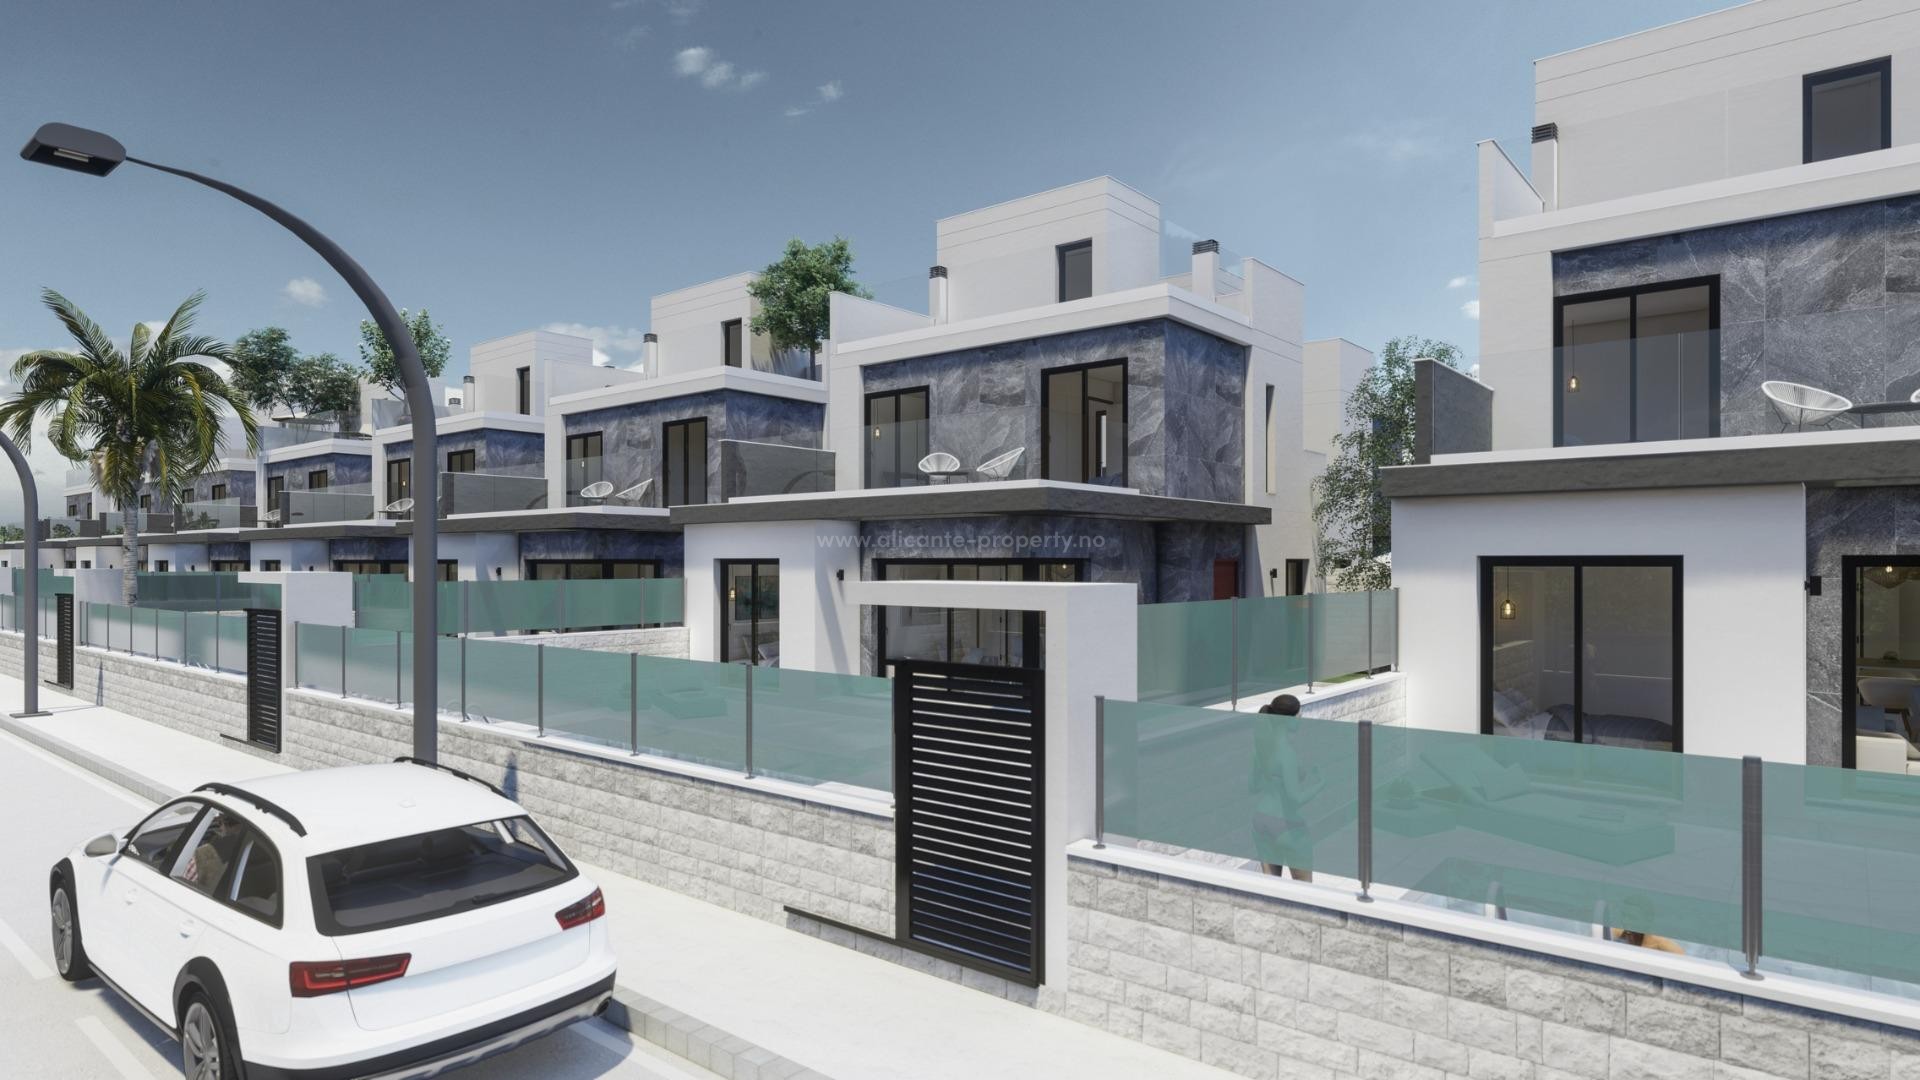 Brand new houses/villas in Pilar de La Horadada, 3 bedrooms, 2 bathrooms, garden with pool, terrace, solarium and basement with parking